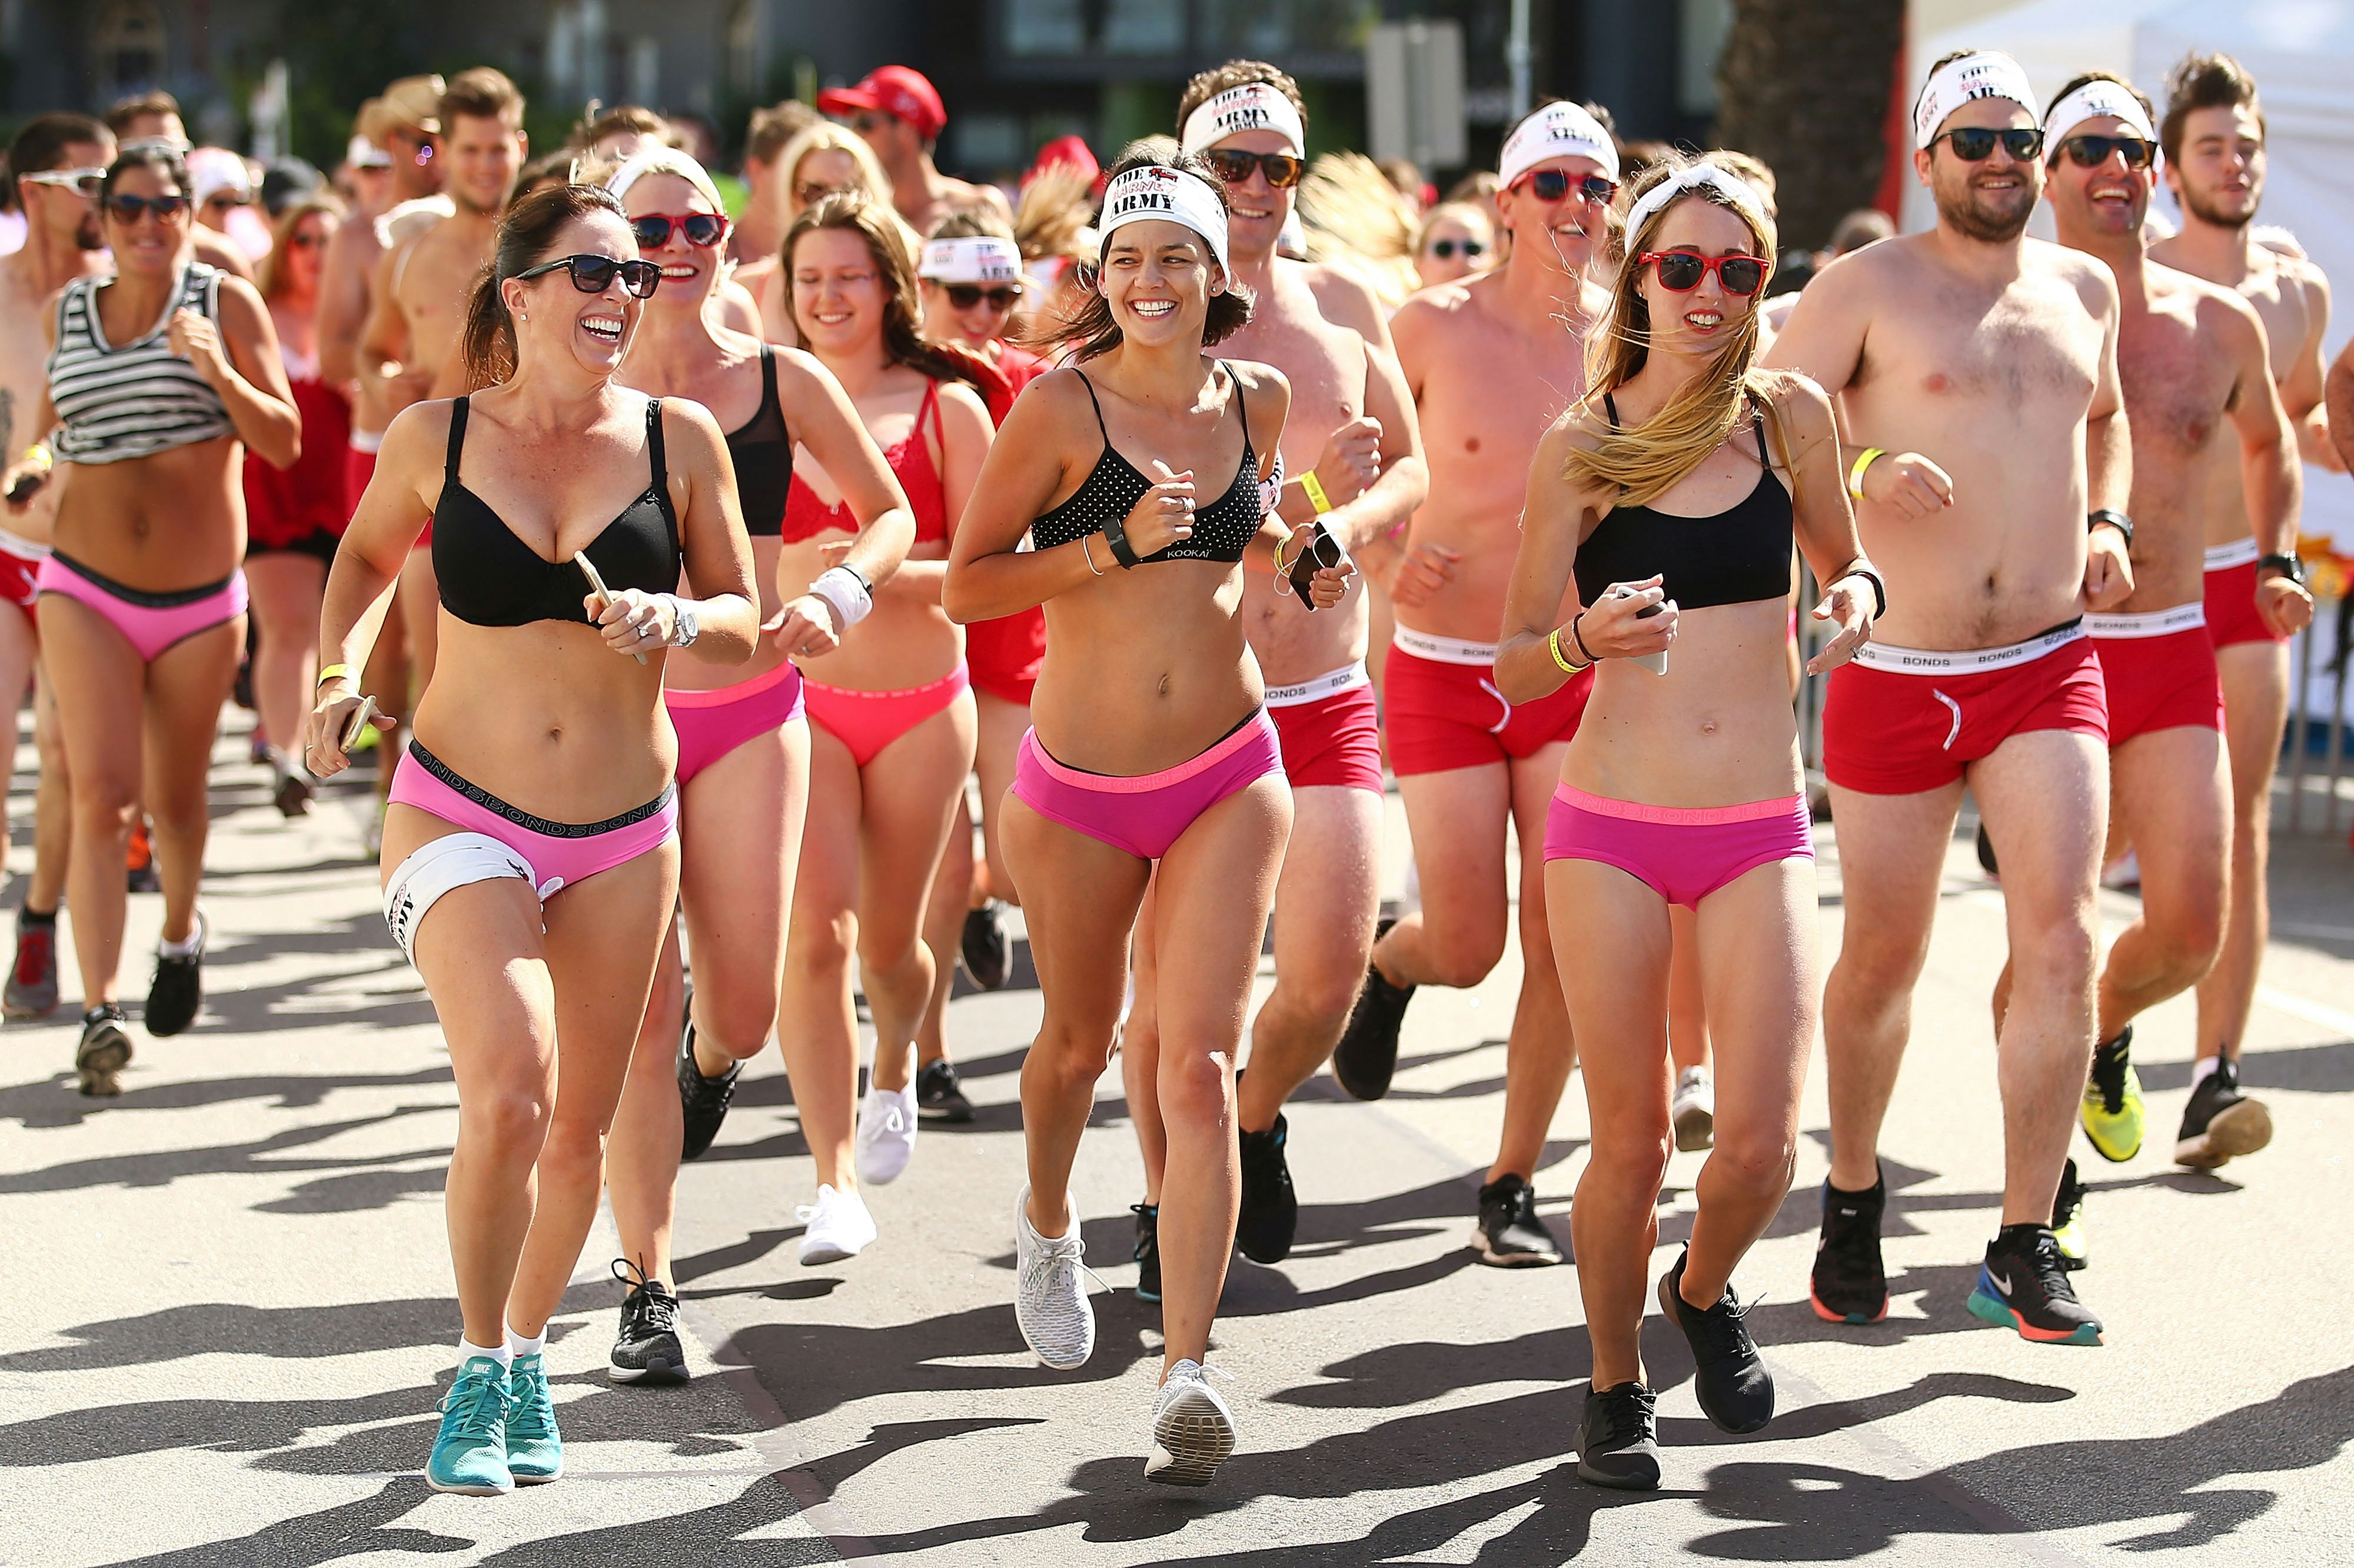 A group of people run down a street in their underwear in the Cupid's Undie Run